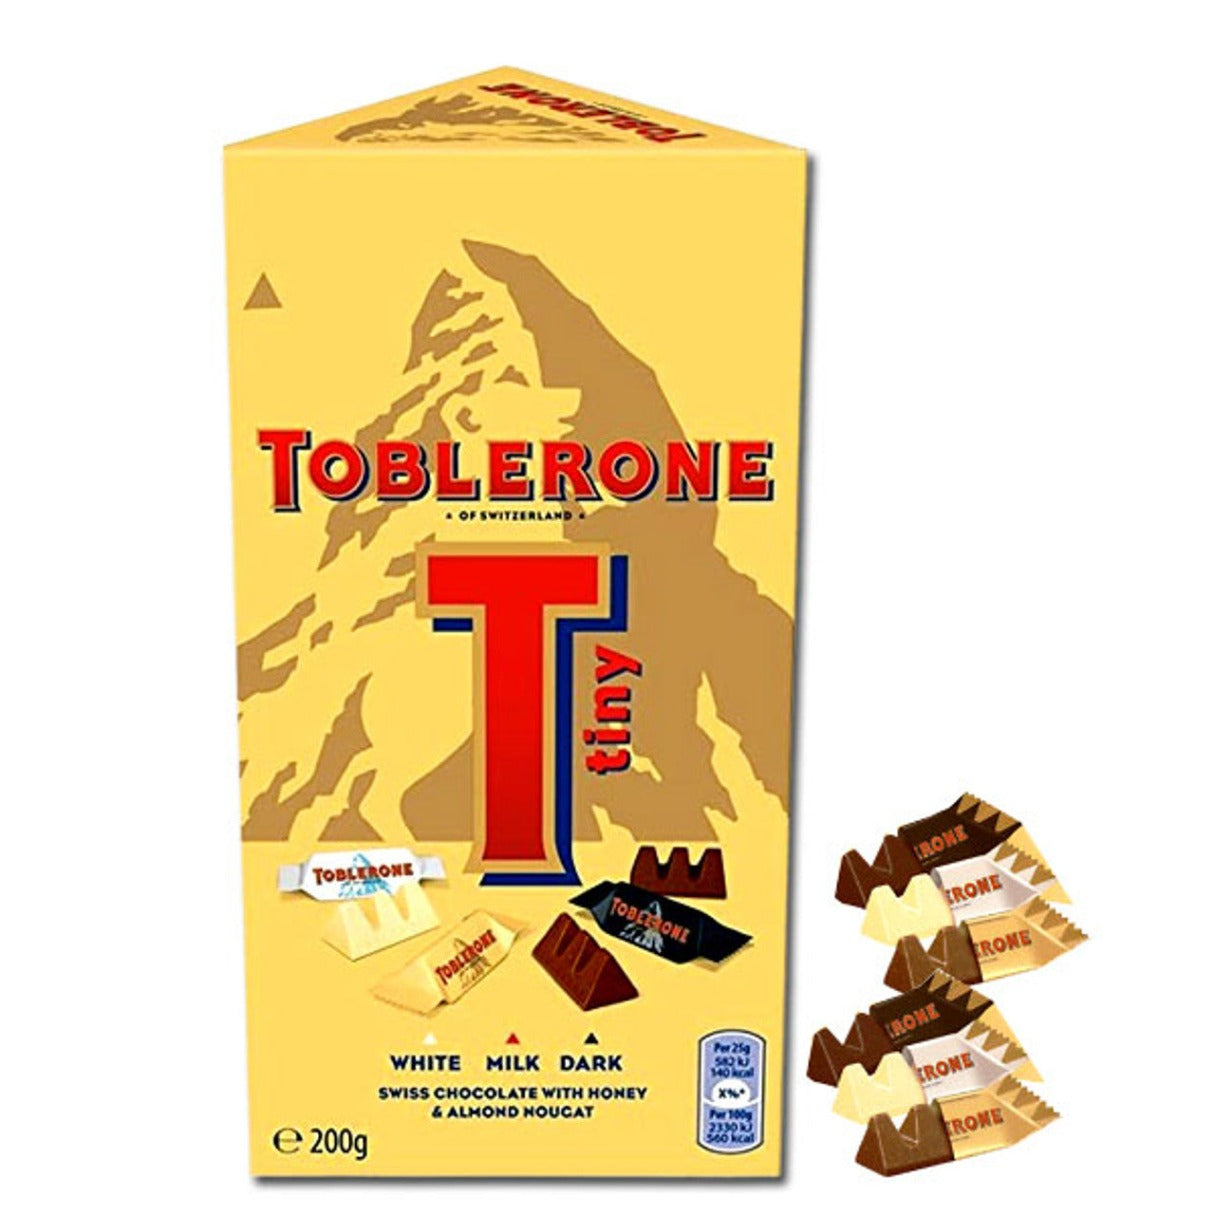 Toblerone Tiny Assortment Box 7.05oz - 12ct